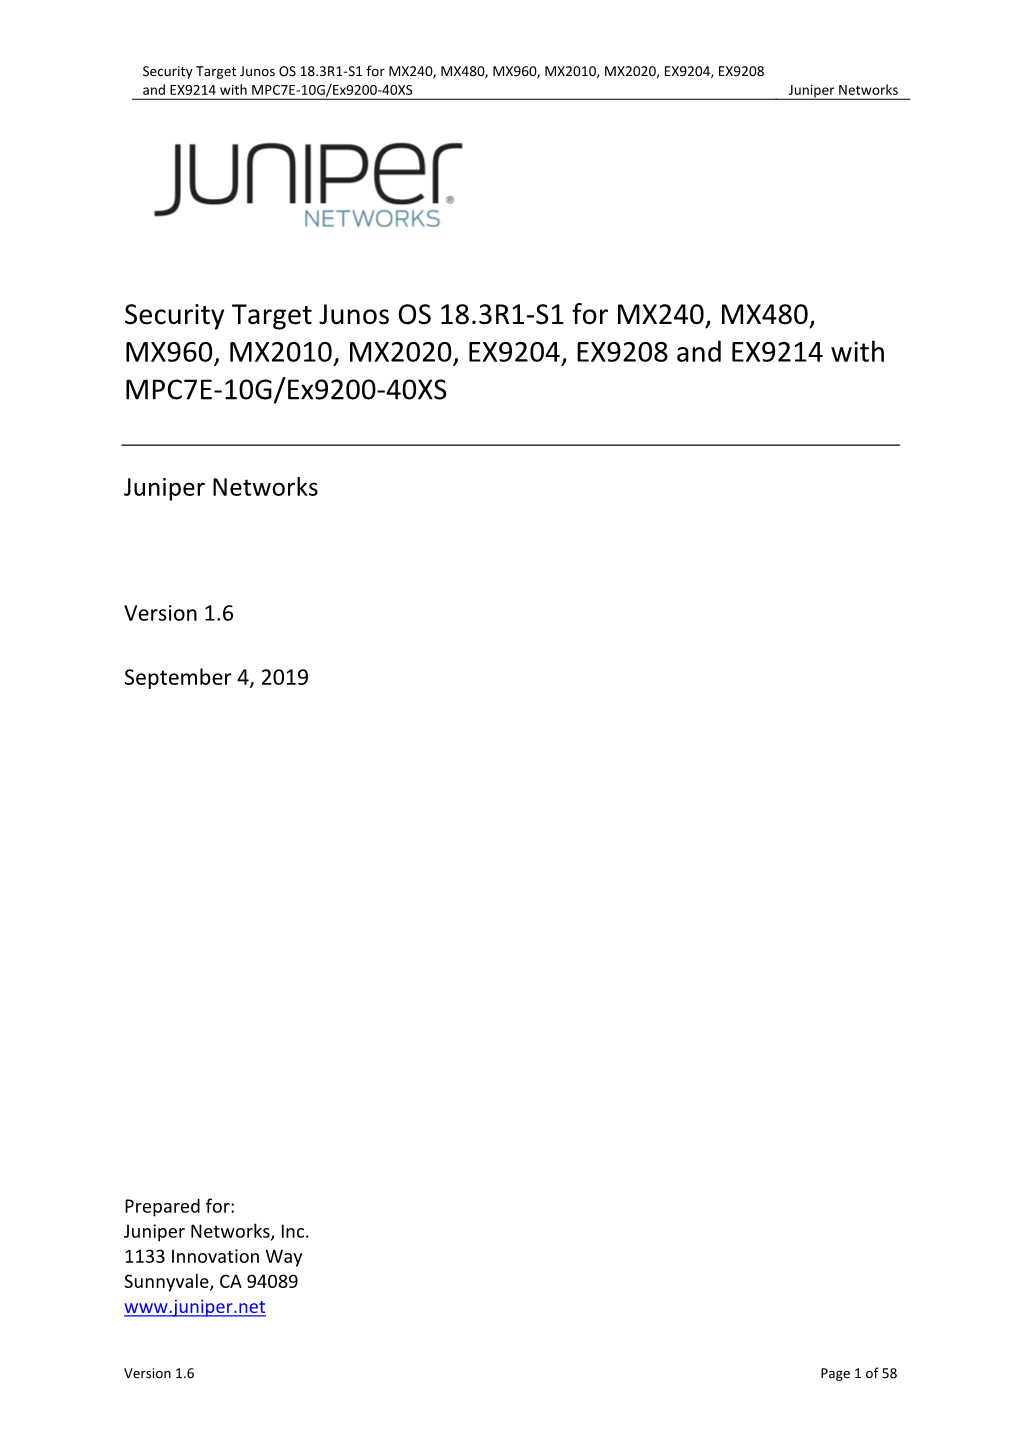 Security Target Junos OS 18.3R1-S1 for MX240, MX480, MX960, MX2010, MX2020, EX9204, EX9208 and EX9214 with MPC7E-10G/Ex9200-40XS Juniper Networks